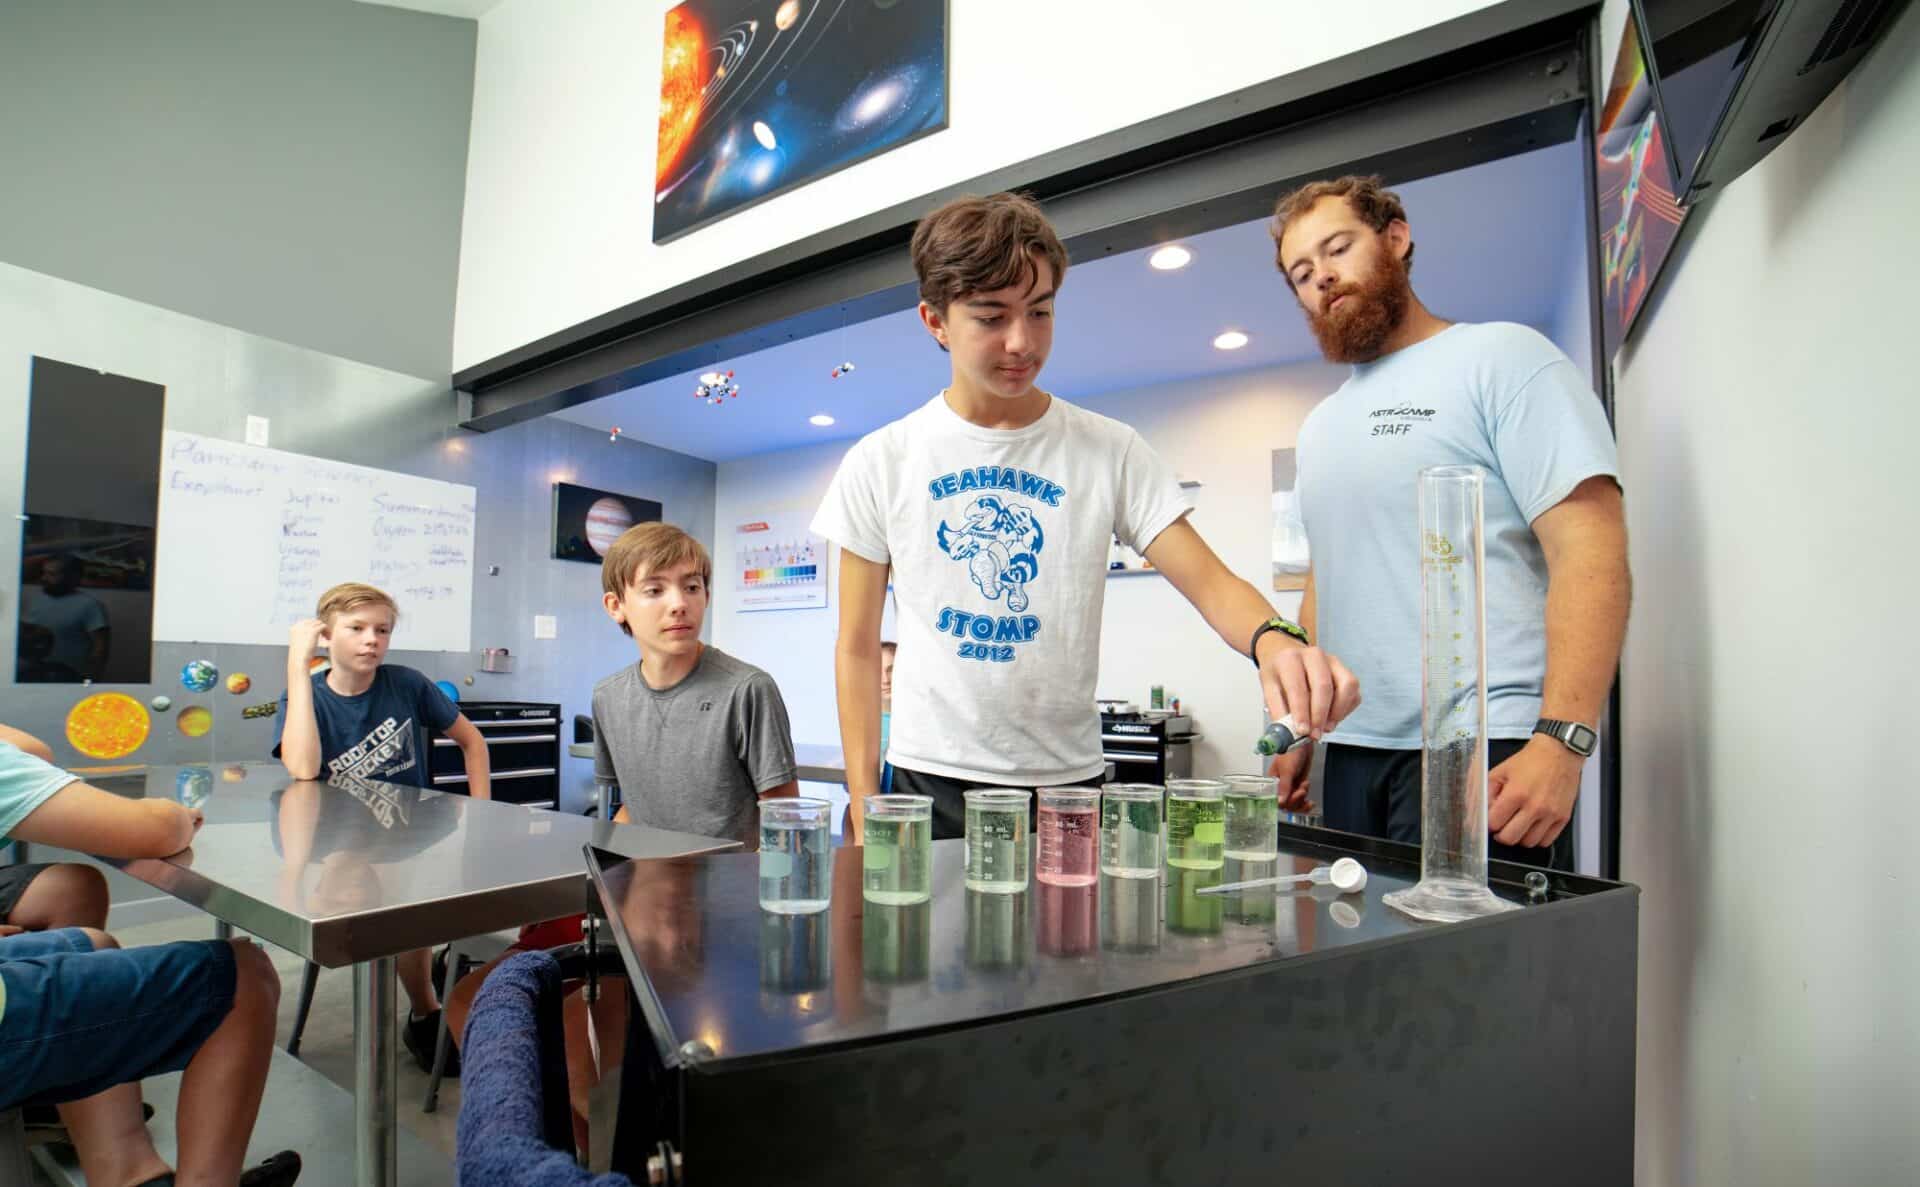 Students conducting an experiment using beakers.